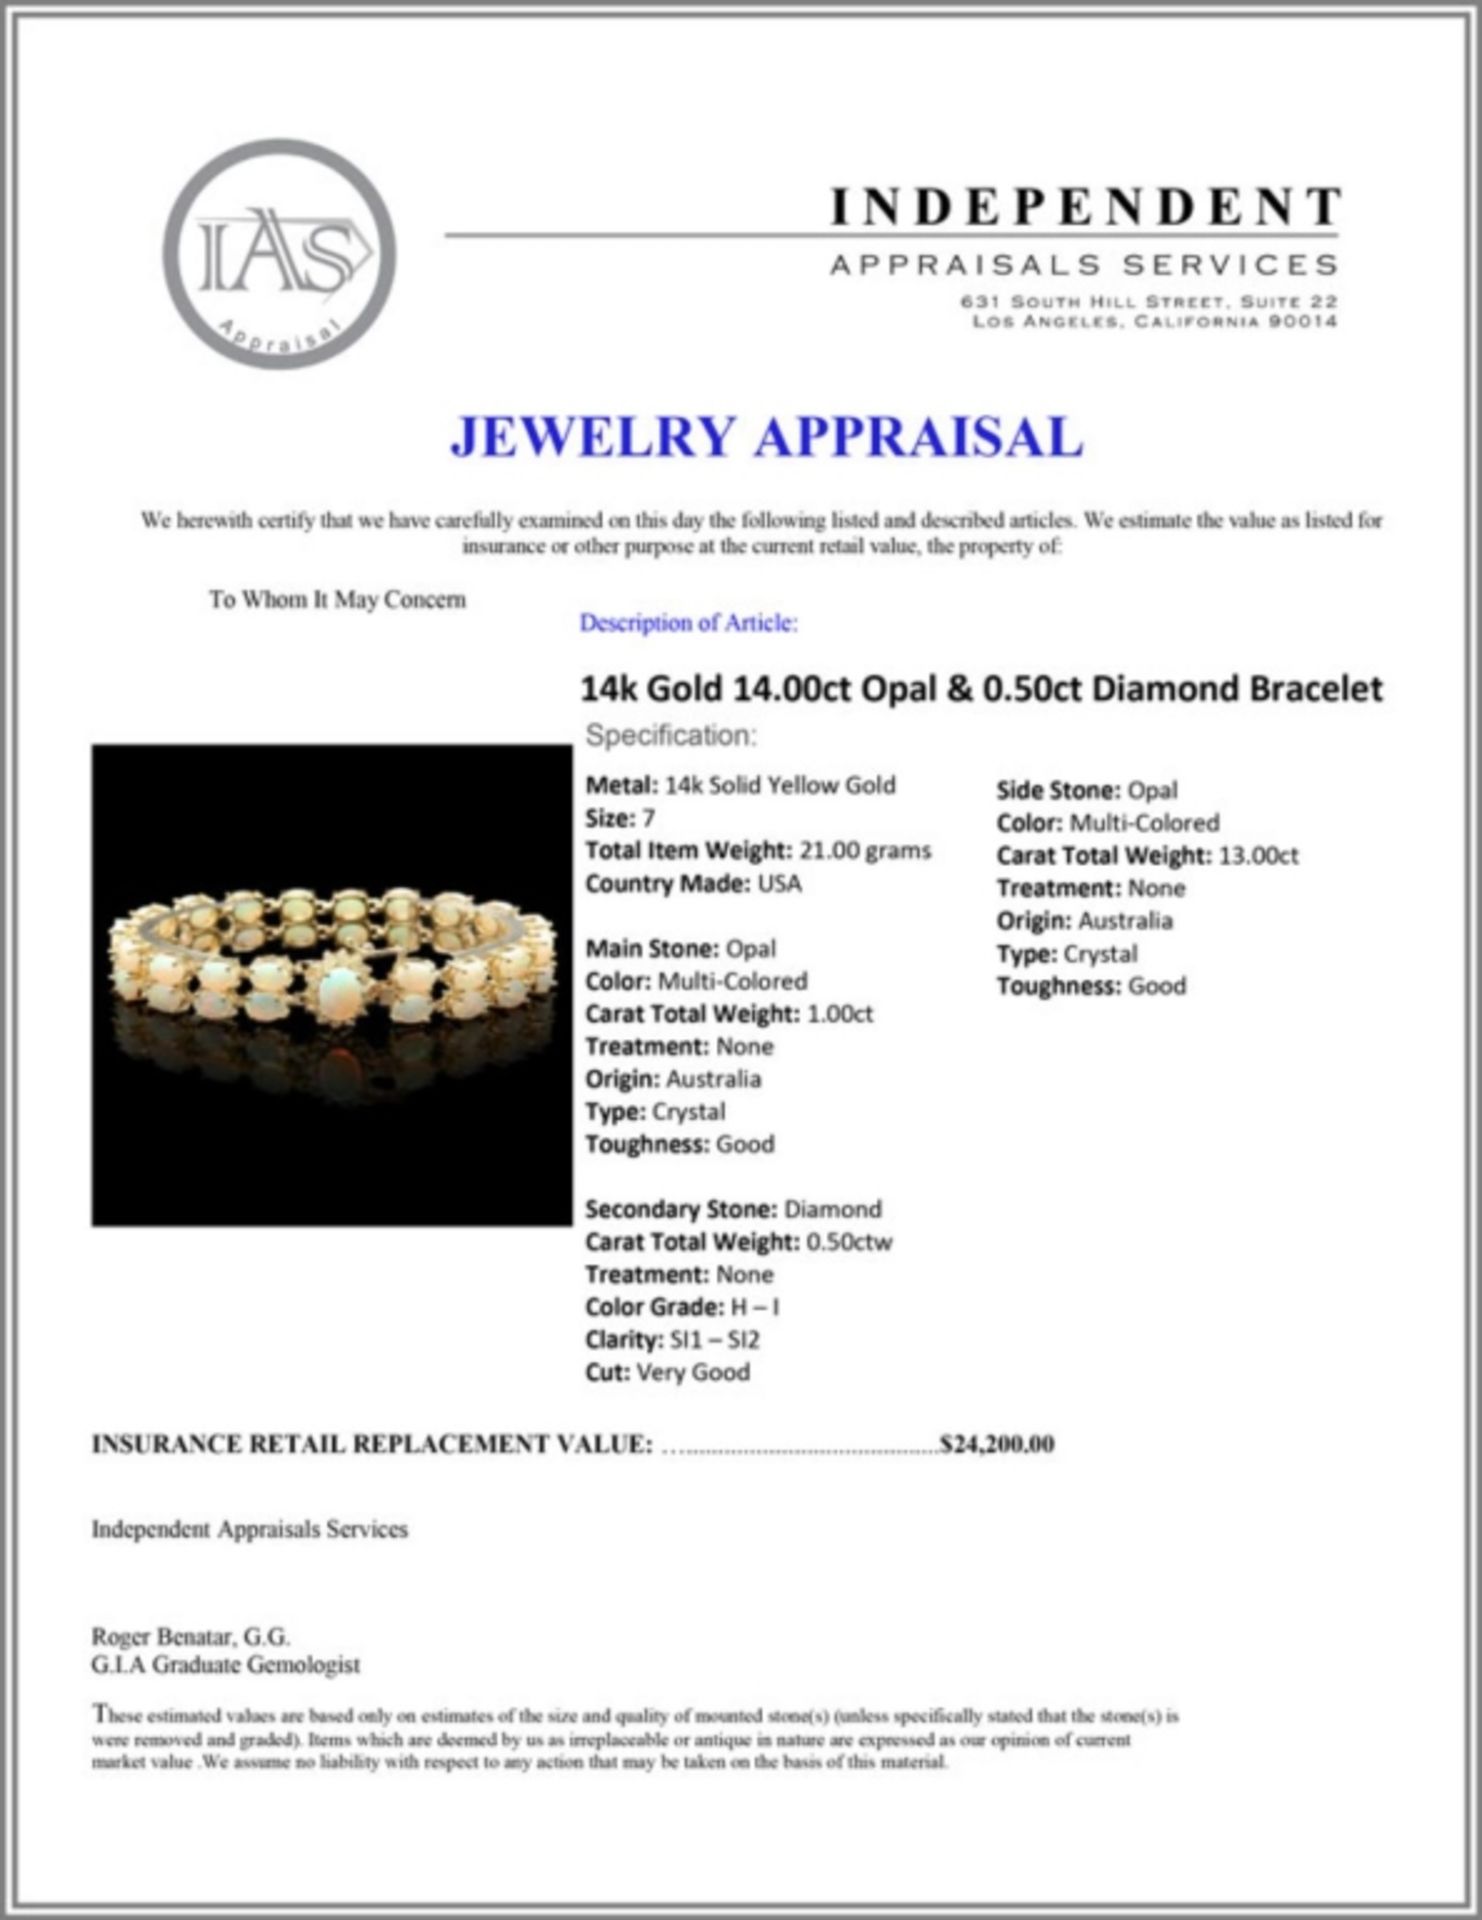 14k Gold 14.00ct Opal & 0.50ct Diamond Bracelet - Image 3 of 3